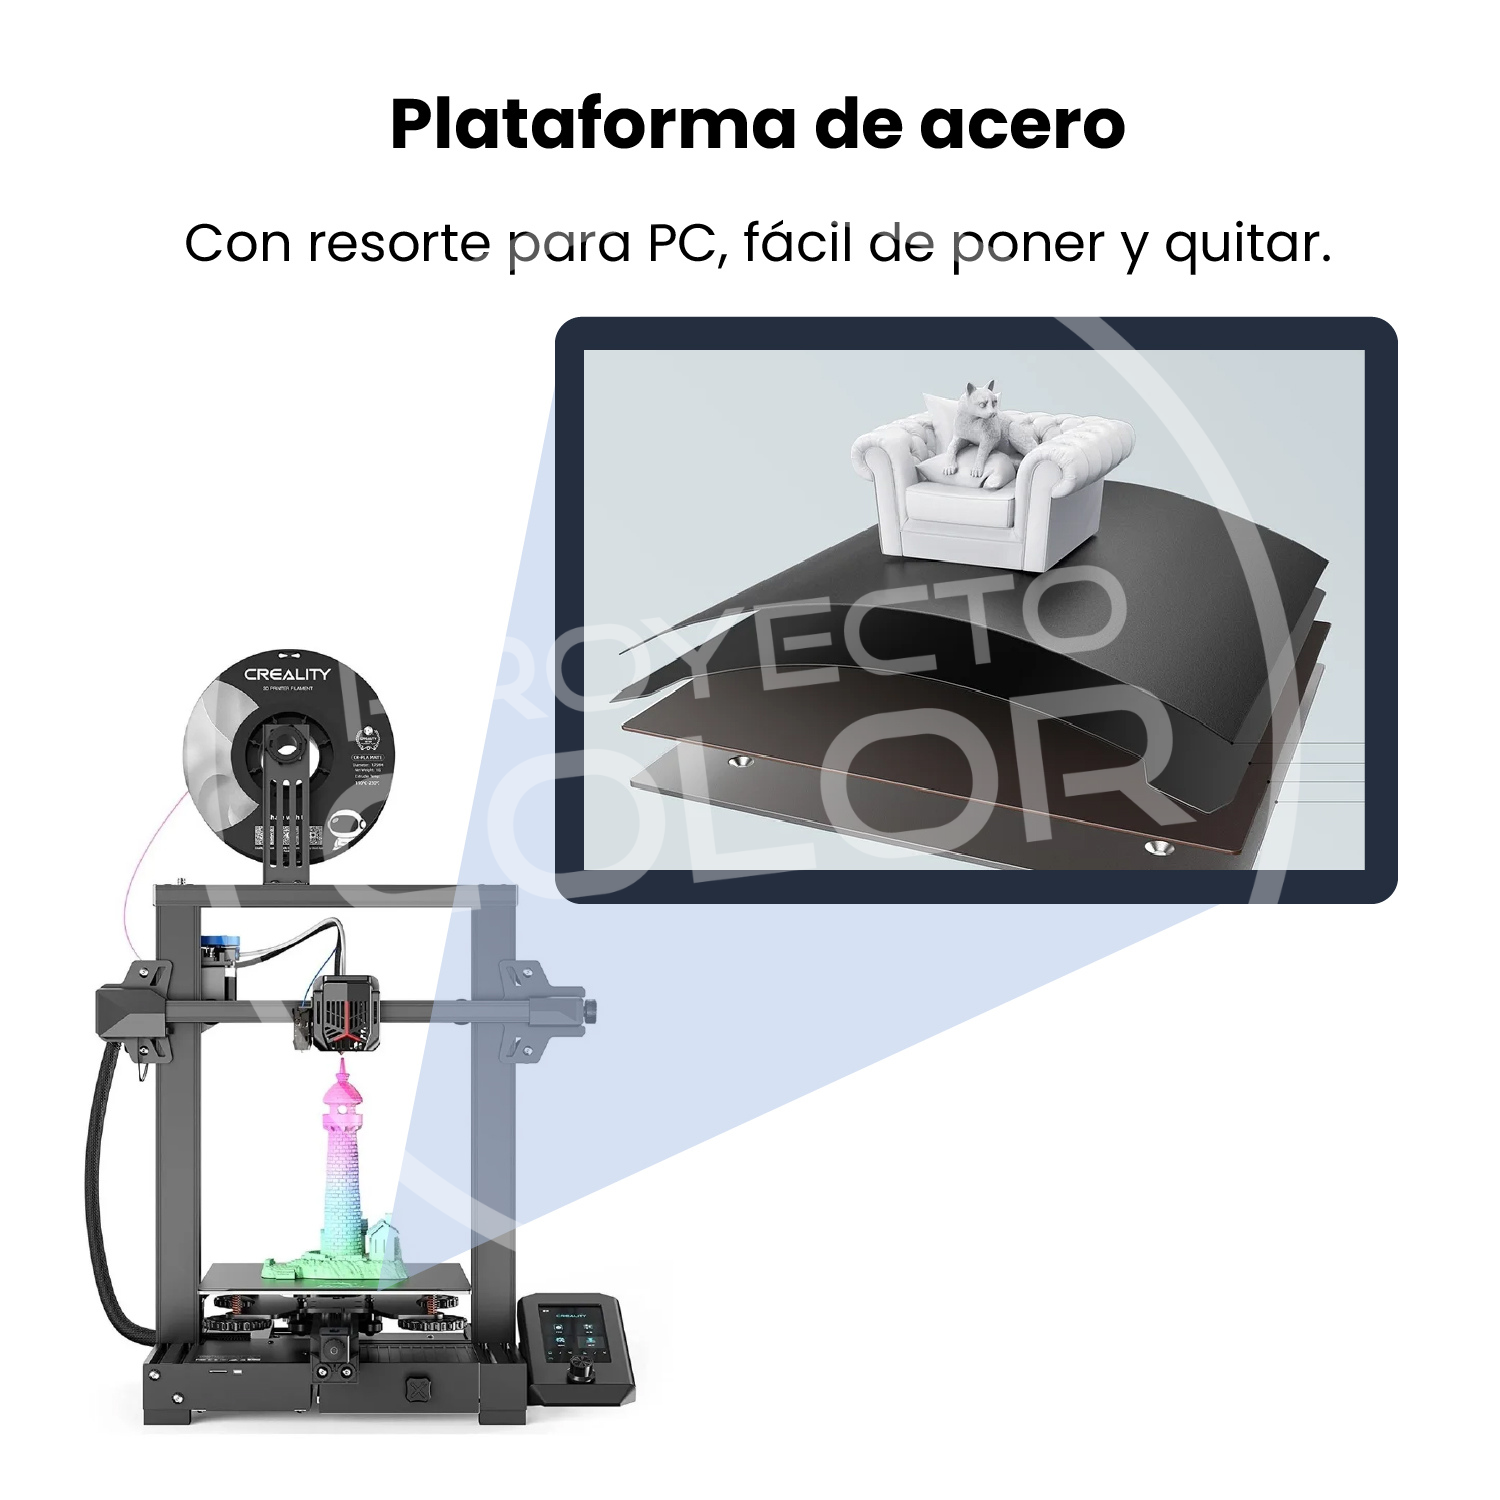 Creality Ender 3 V2 Neo - Impresora 3D oficial con kit de nivelación  automática CR Touch, plataforma de acero con resorte, extrusora de metal